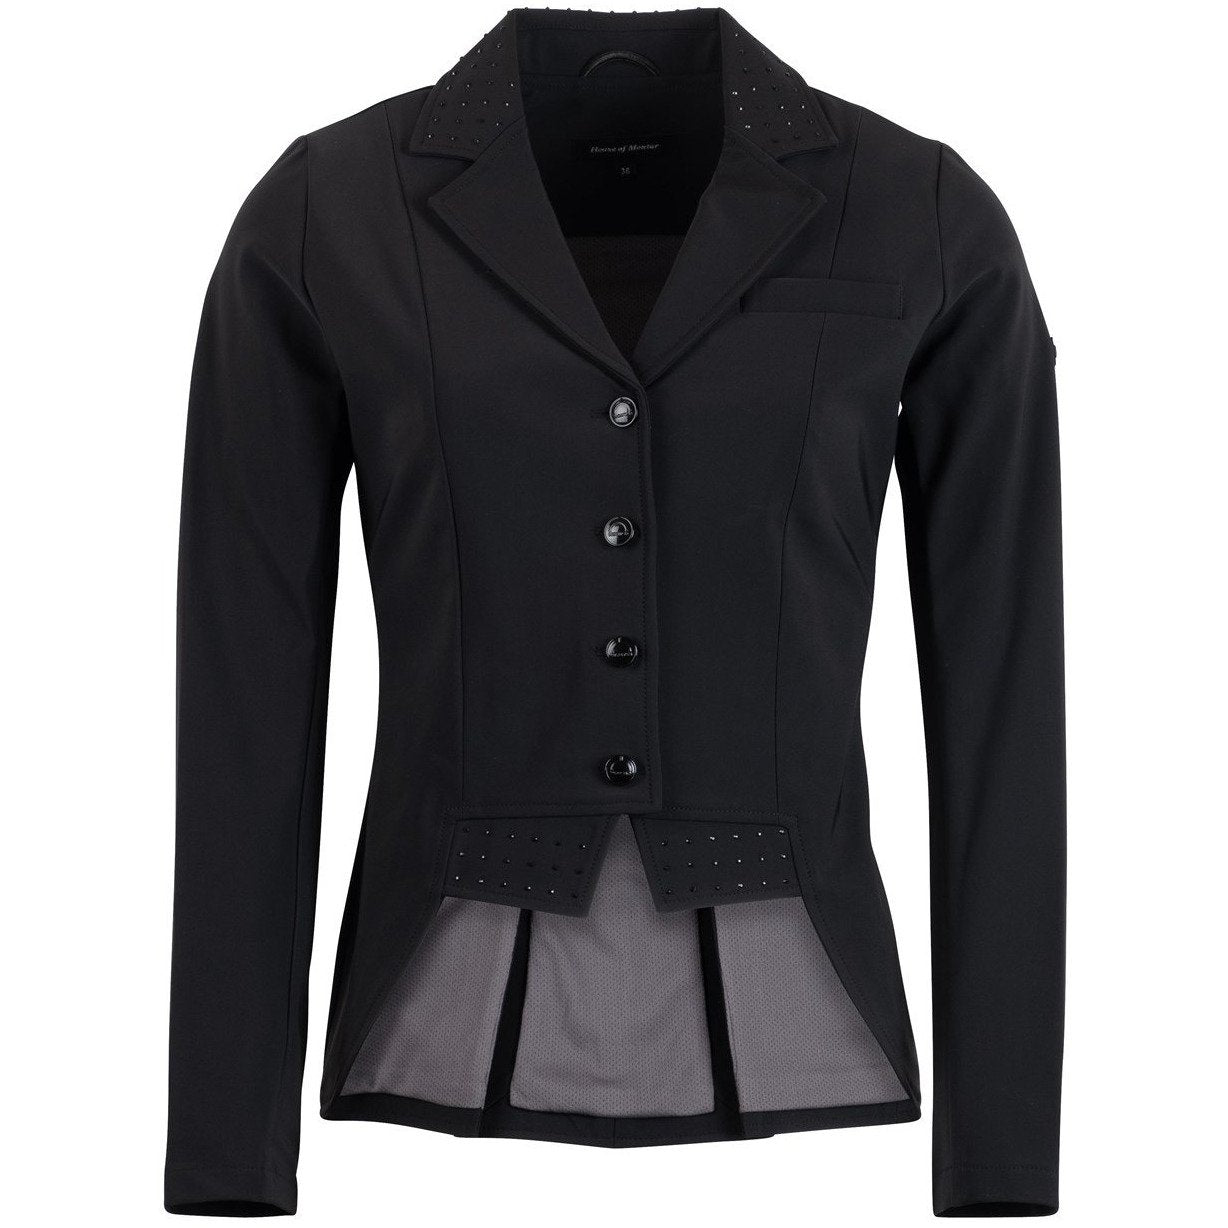 Montar Dressage Show Softshell Jacket - Short Tailcoat, Black